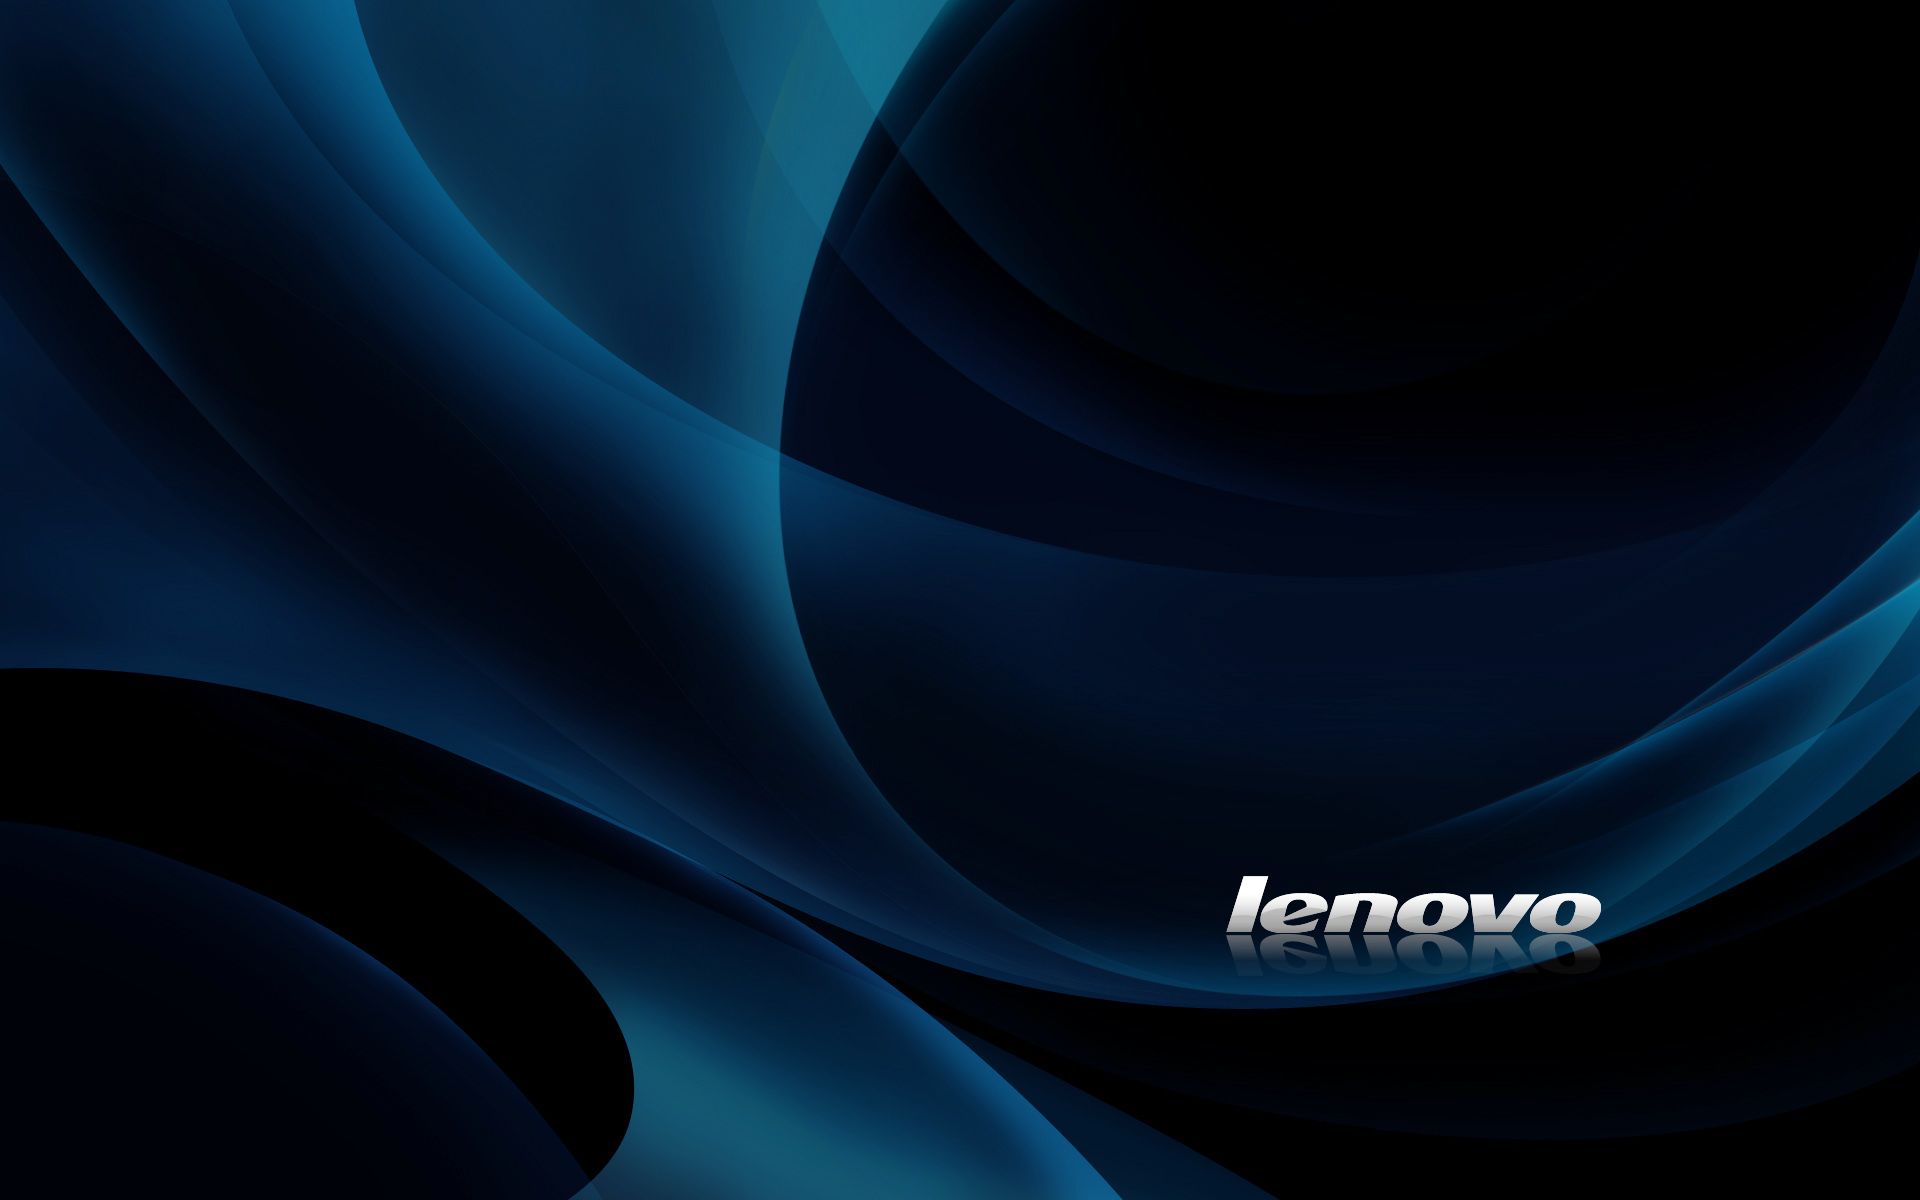 Lenovo Yoga Background. Inspiring Yoga